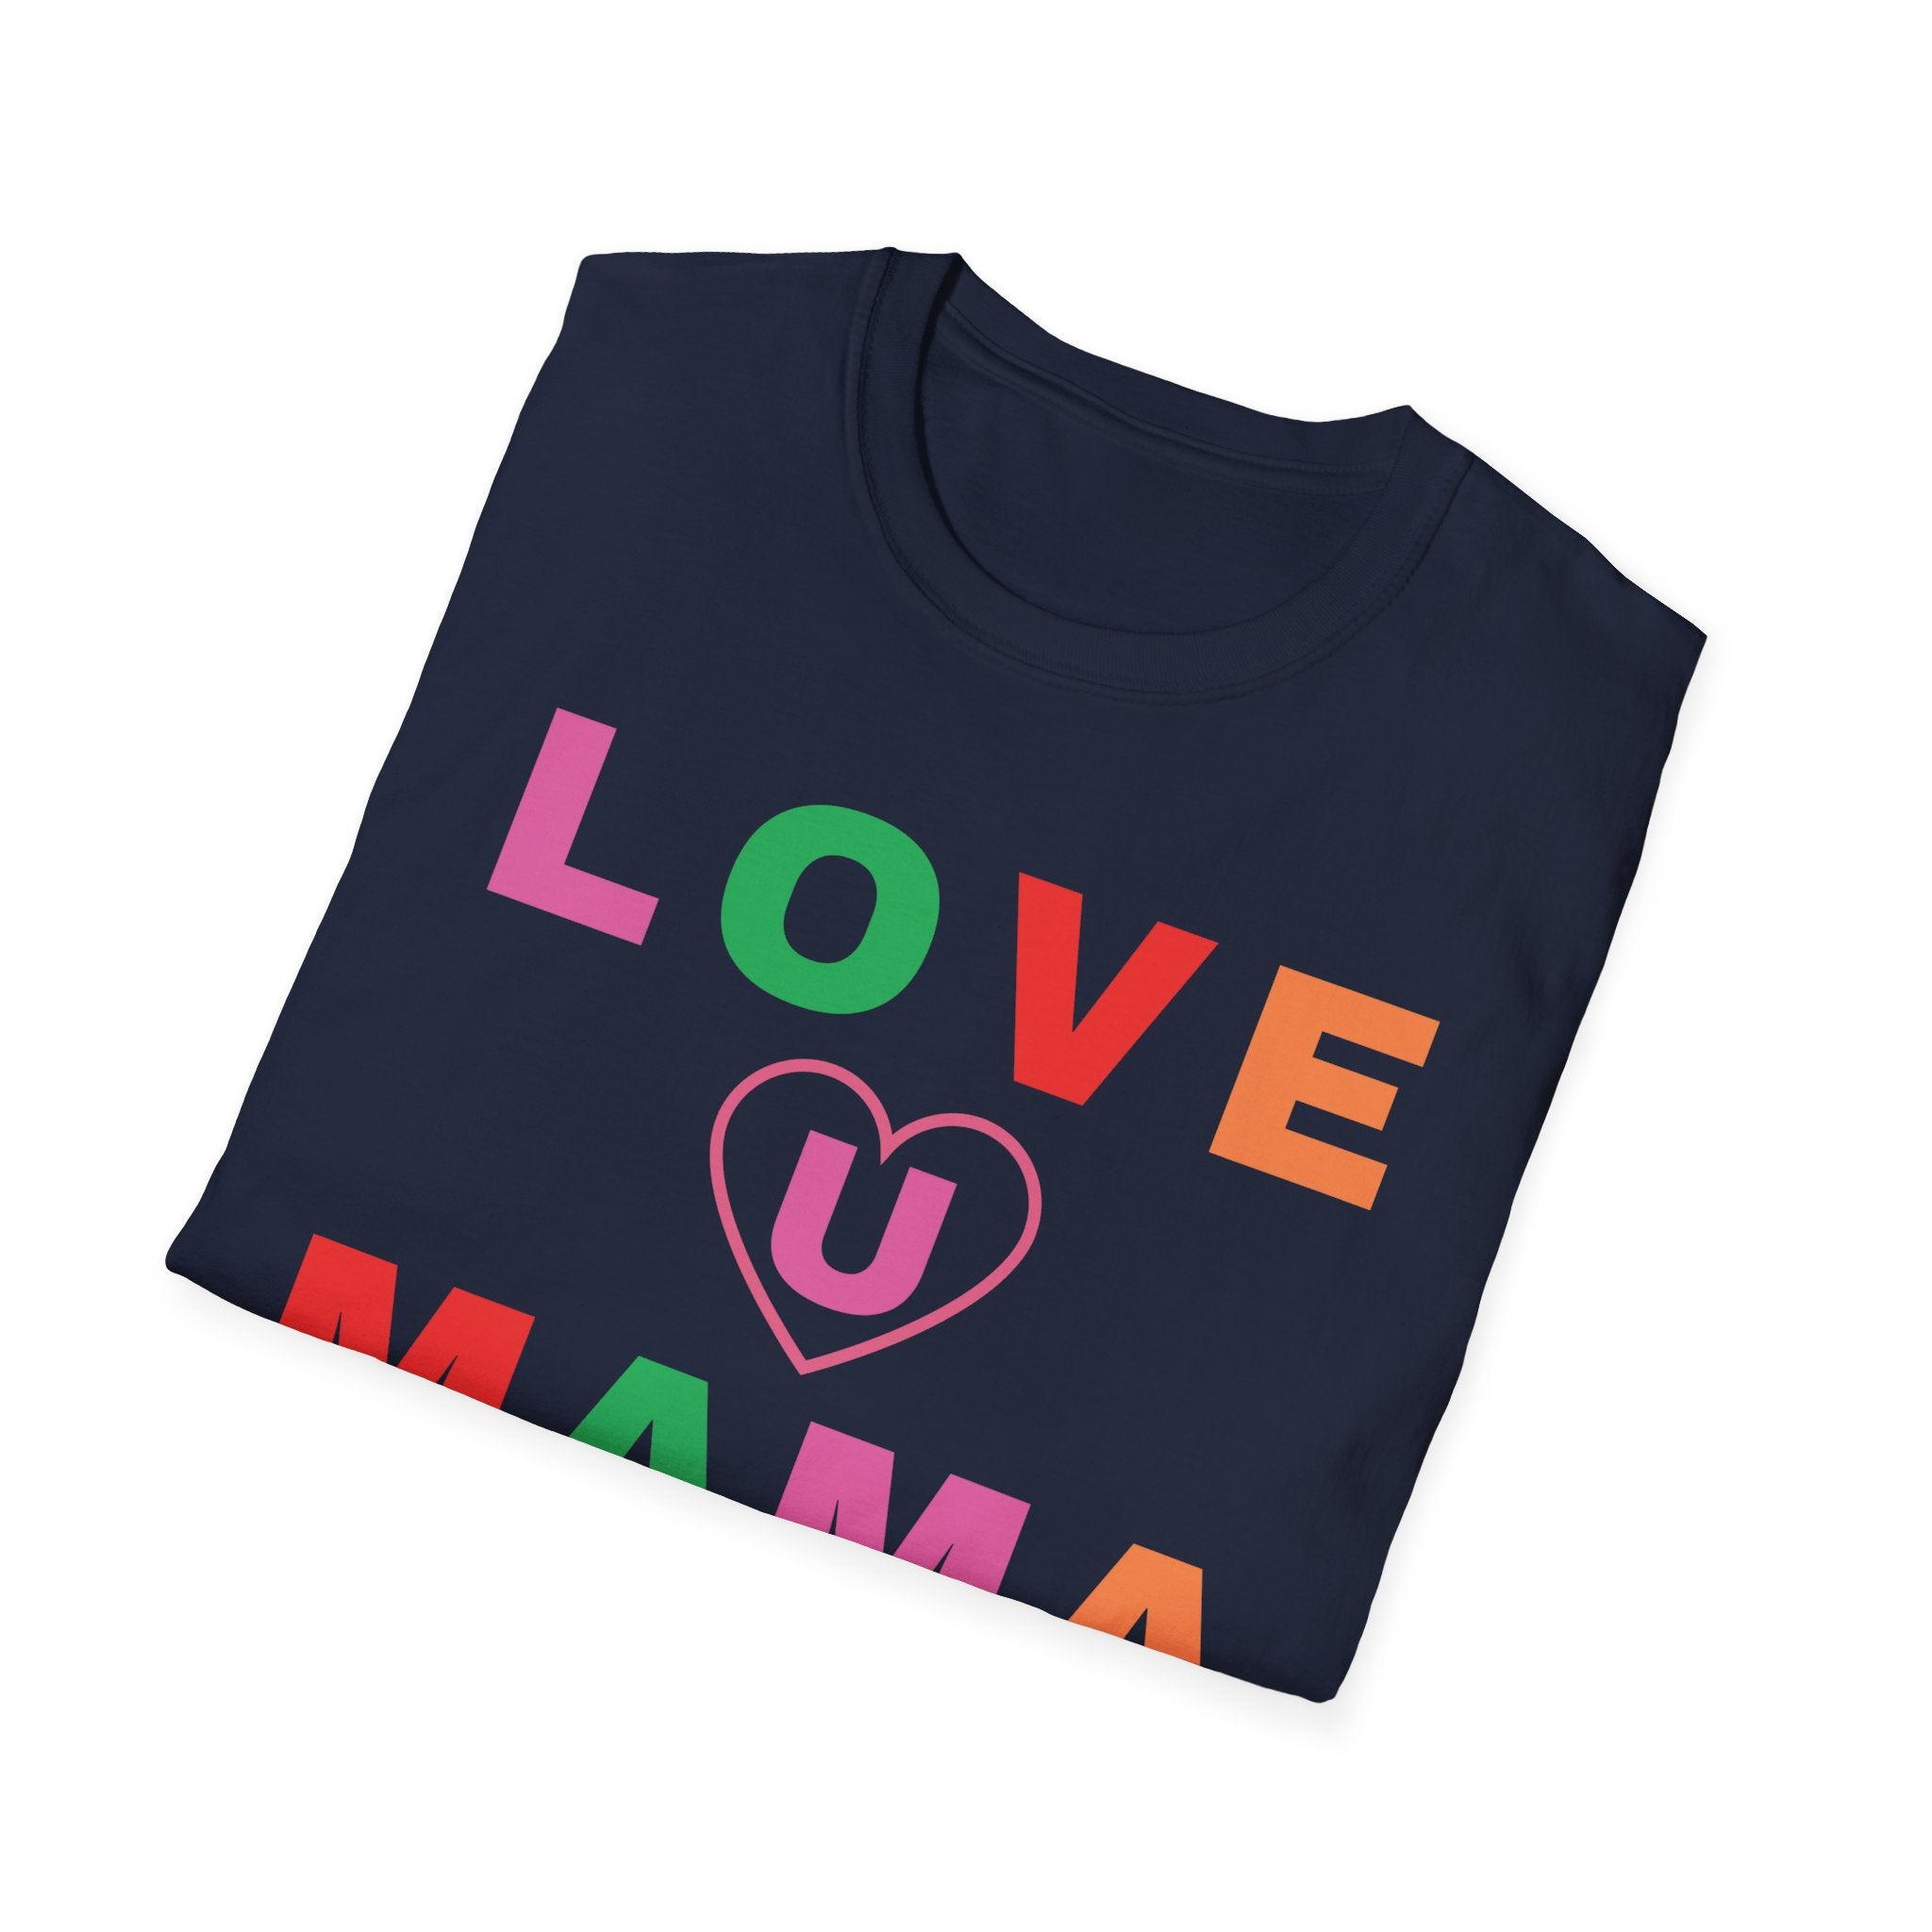 Love U Mama Unisex Softstyle T-Shirt Crew Neck Shirt, Happy Mother's Day Shirt, Mother's Day Shirt, Gift for Mom Shirt